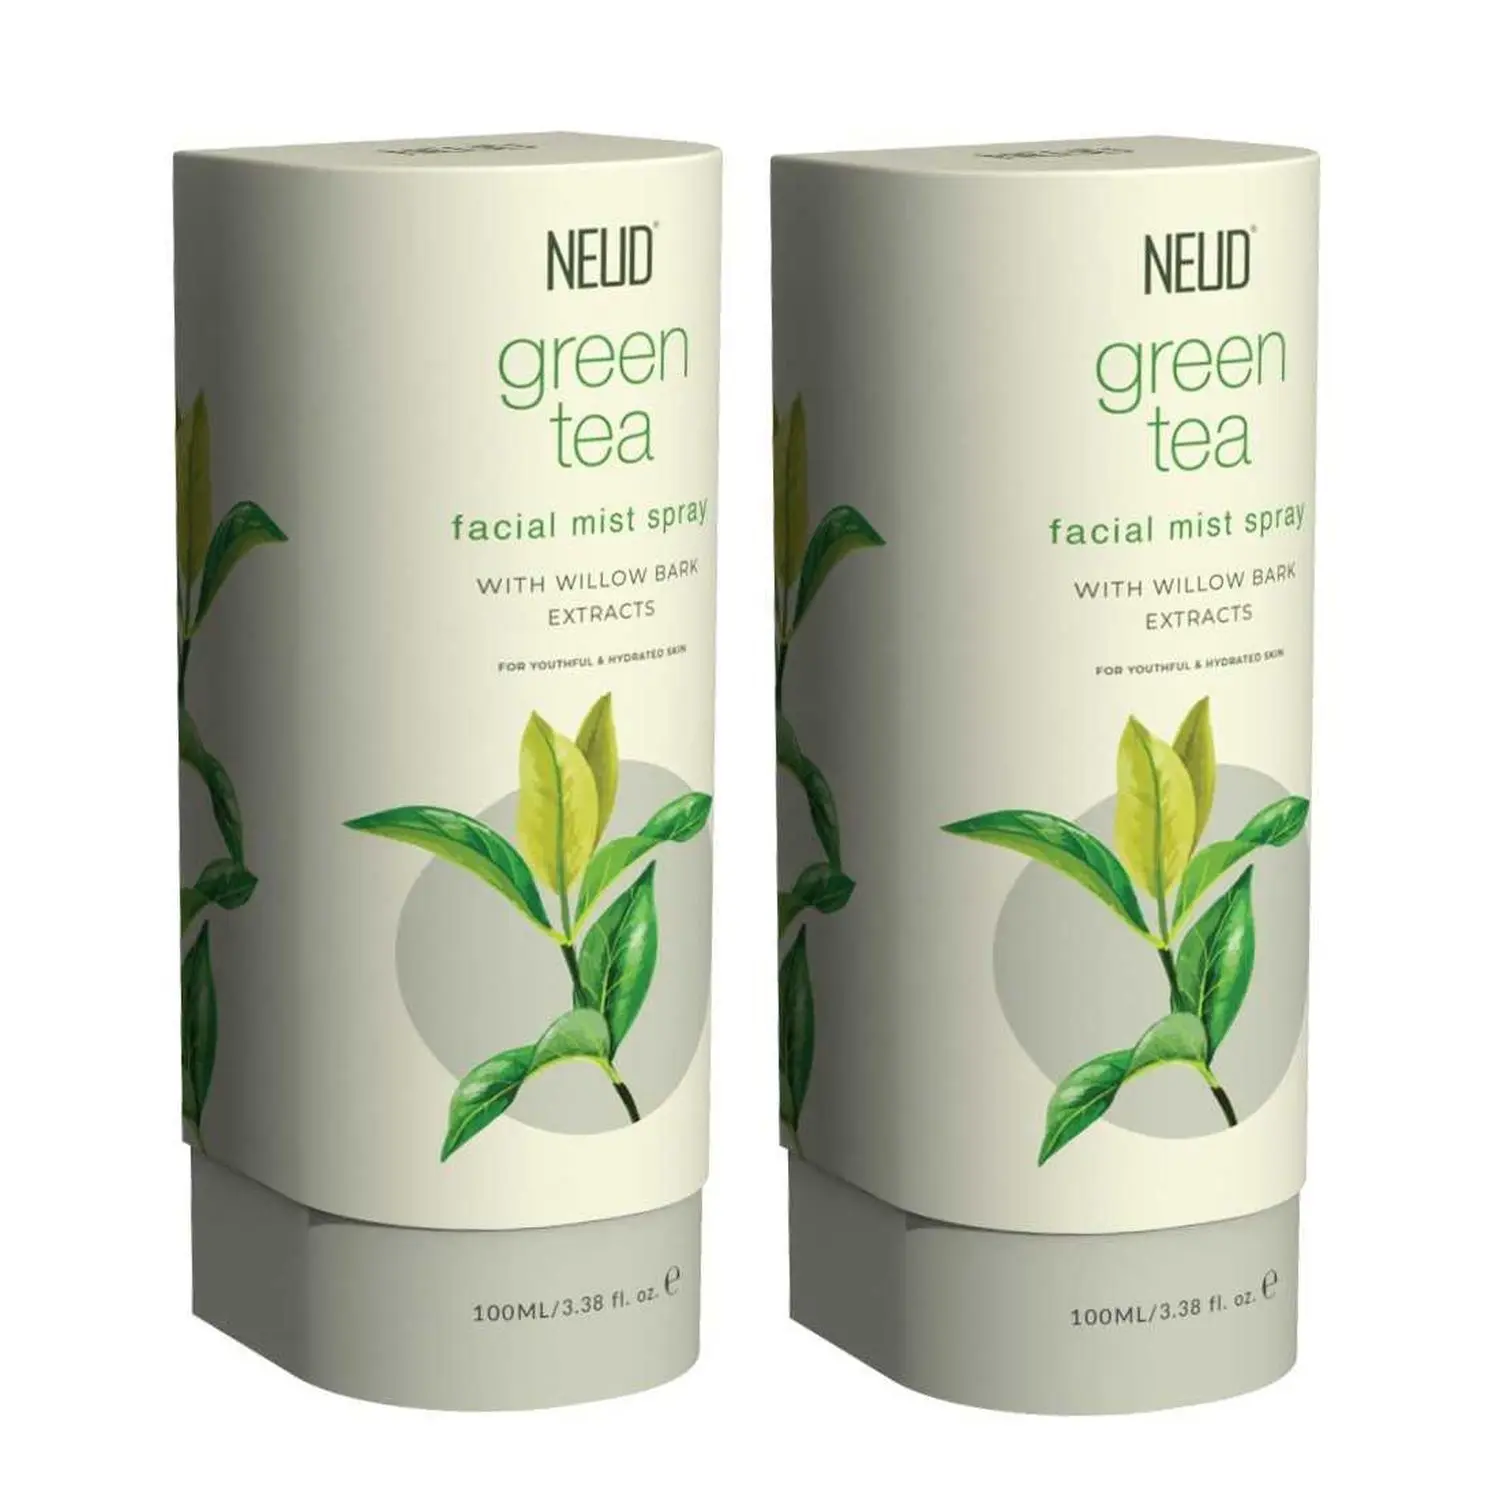 NEUD Green Tea Facial Mist Spray for Youthful & Hydrated Skin - 2 Packs (100 ml Each)